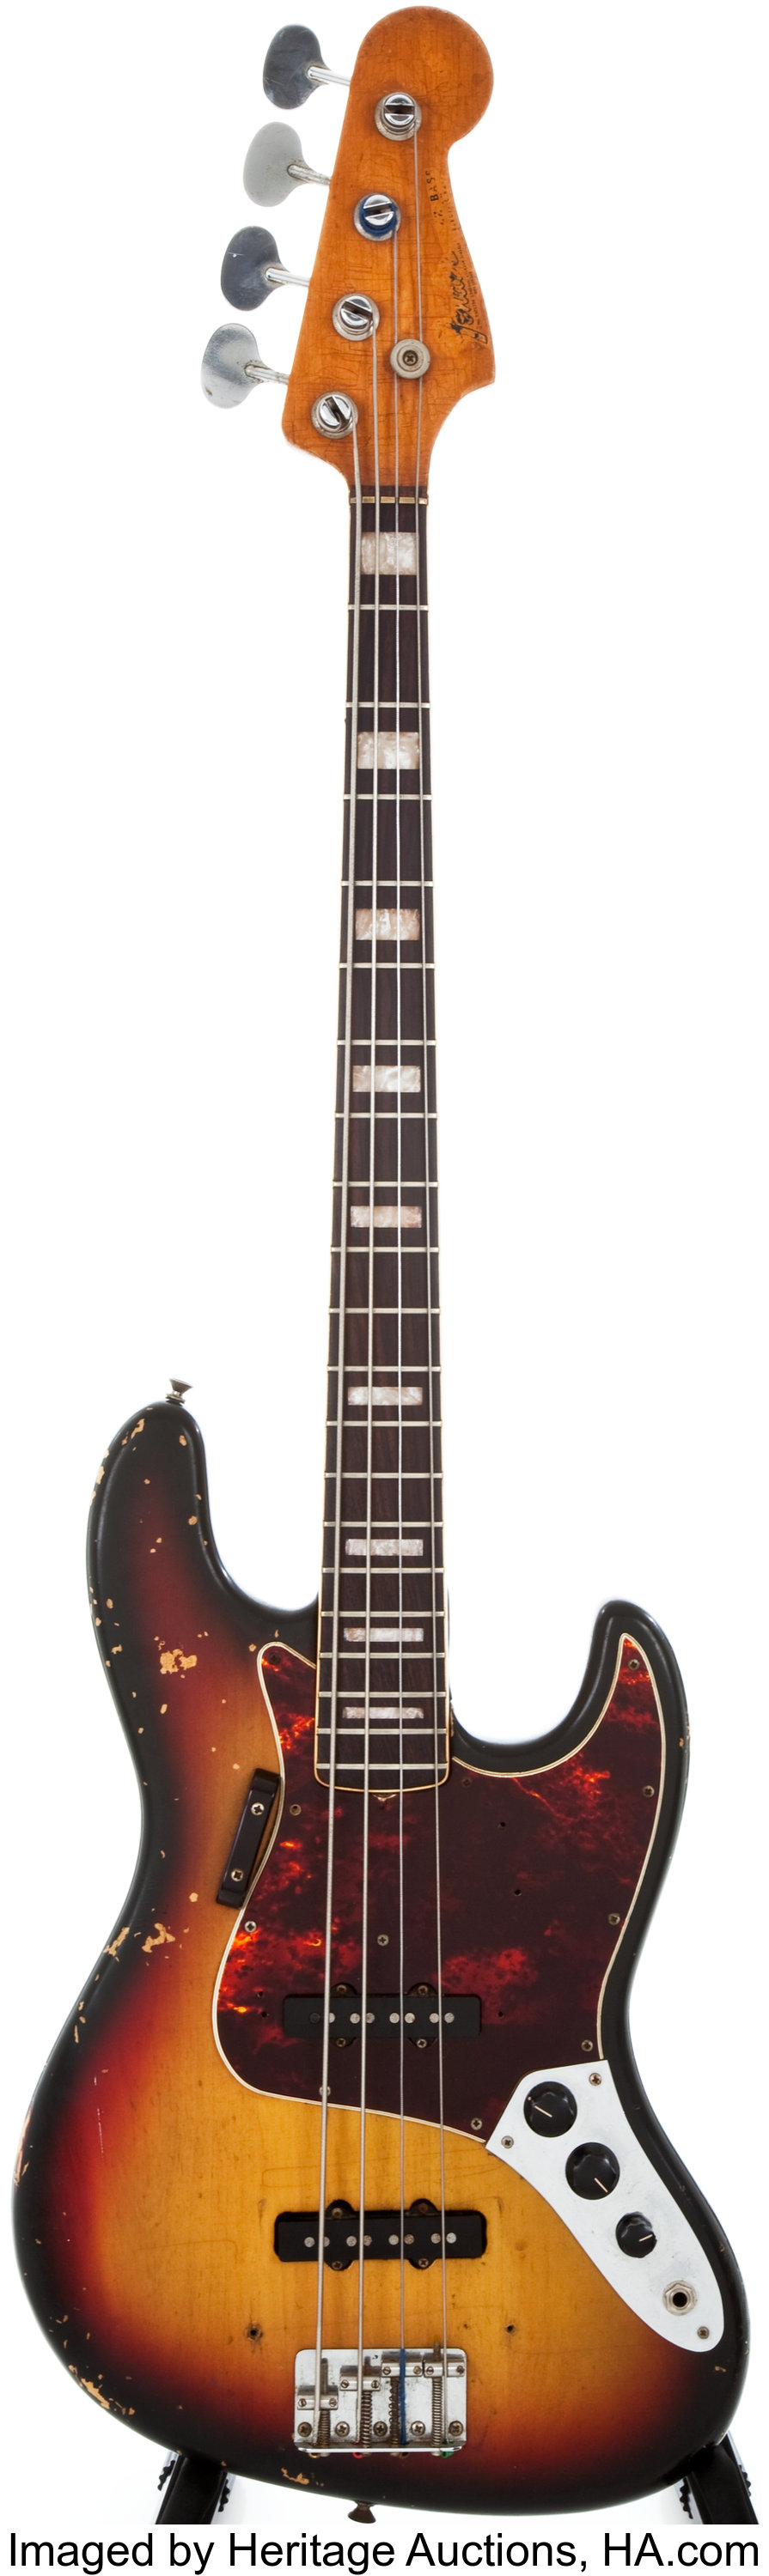 1968 1971 Fender Jazz Bass Sunburst Electric Bass Guitar Lot 54242 Heritage Auctions